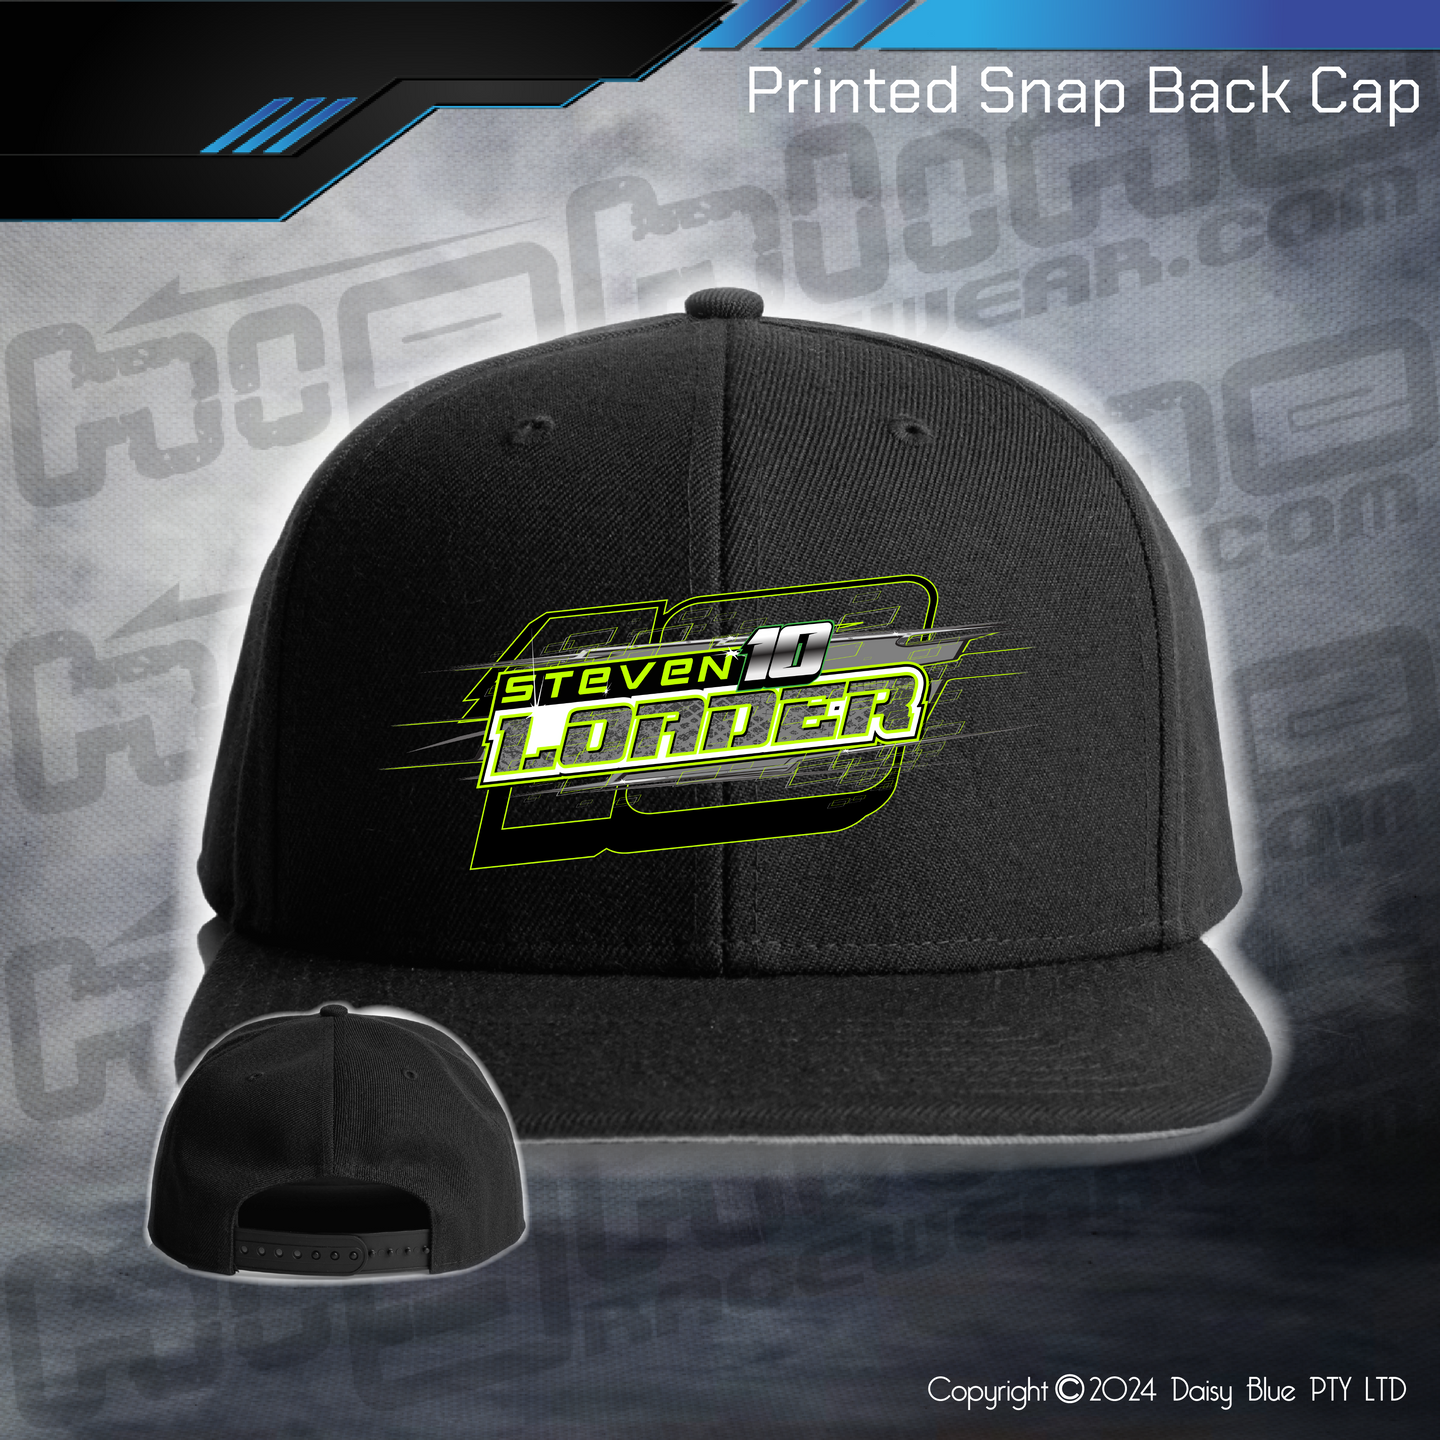 Printed Snap Back CAP - Steve Loader Sports Sedan